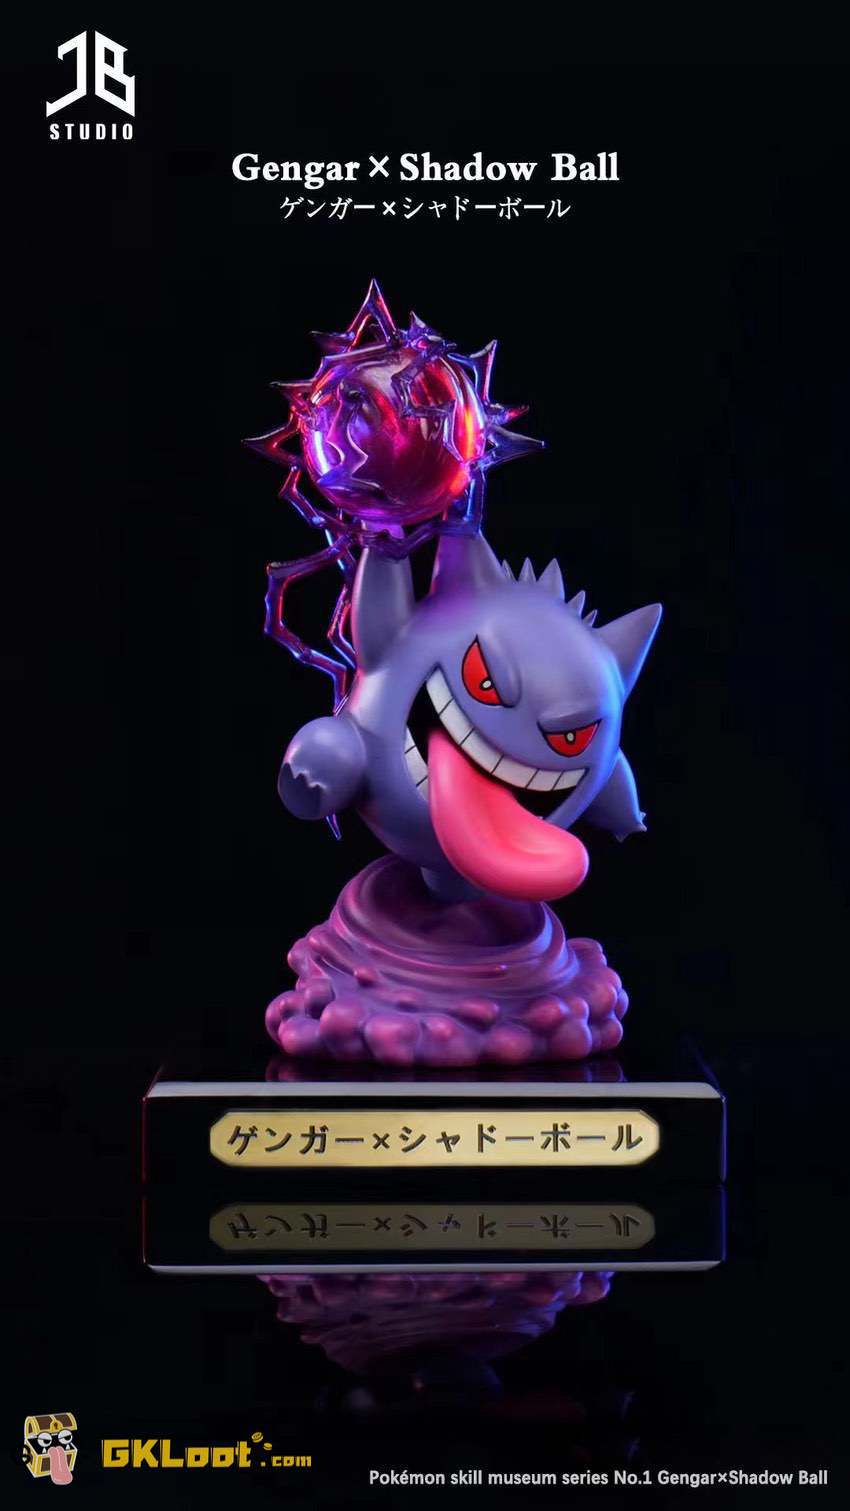 [Out of stock] JB Studio Pokémon Gengar & Shadow Ball Statue